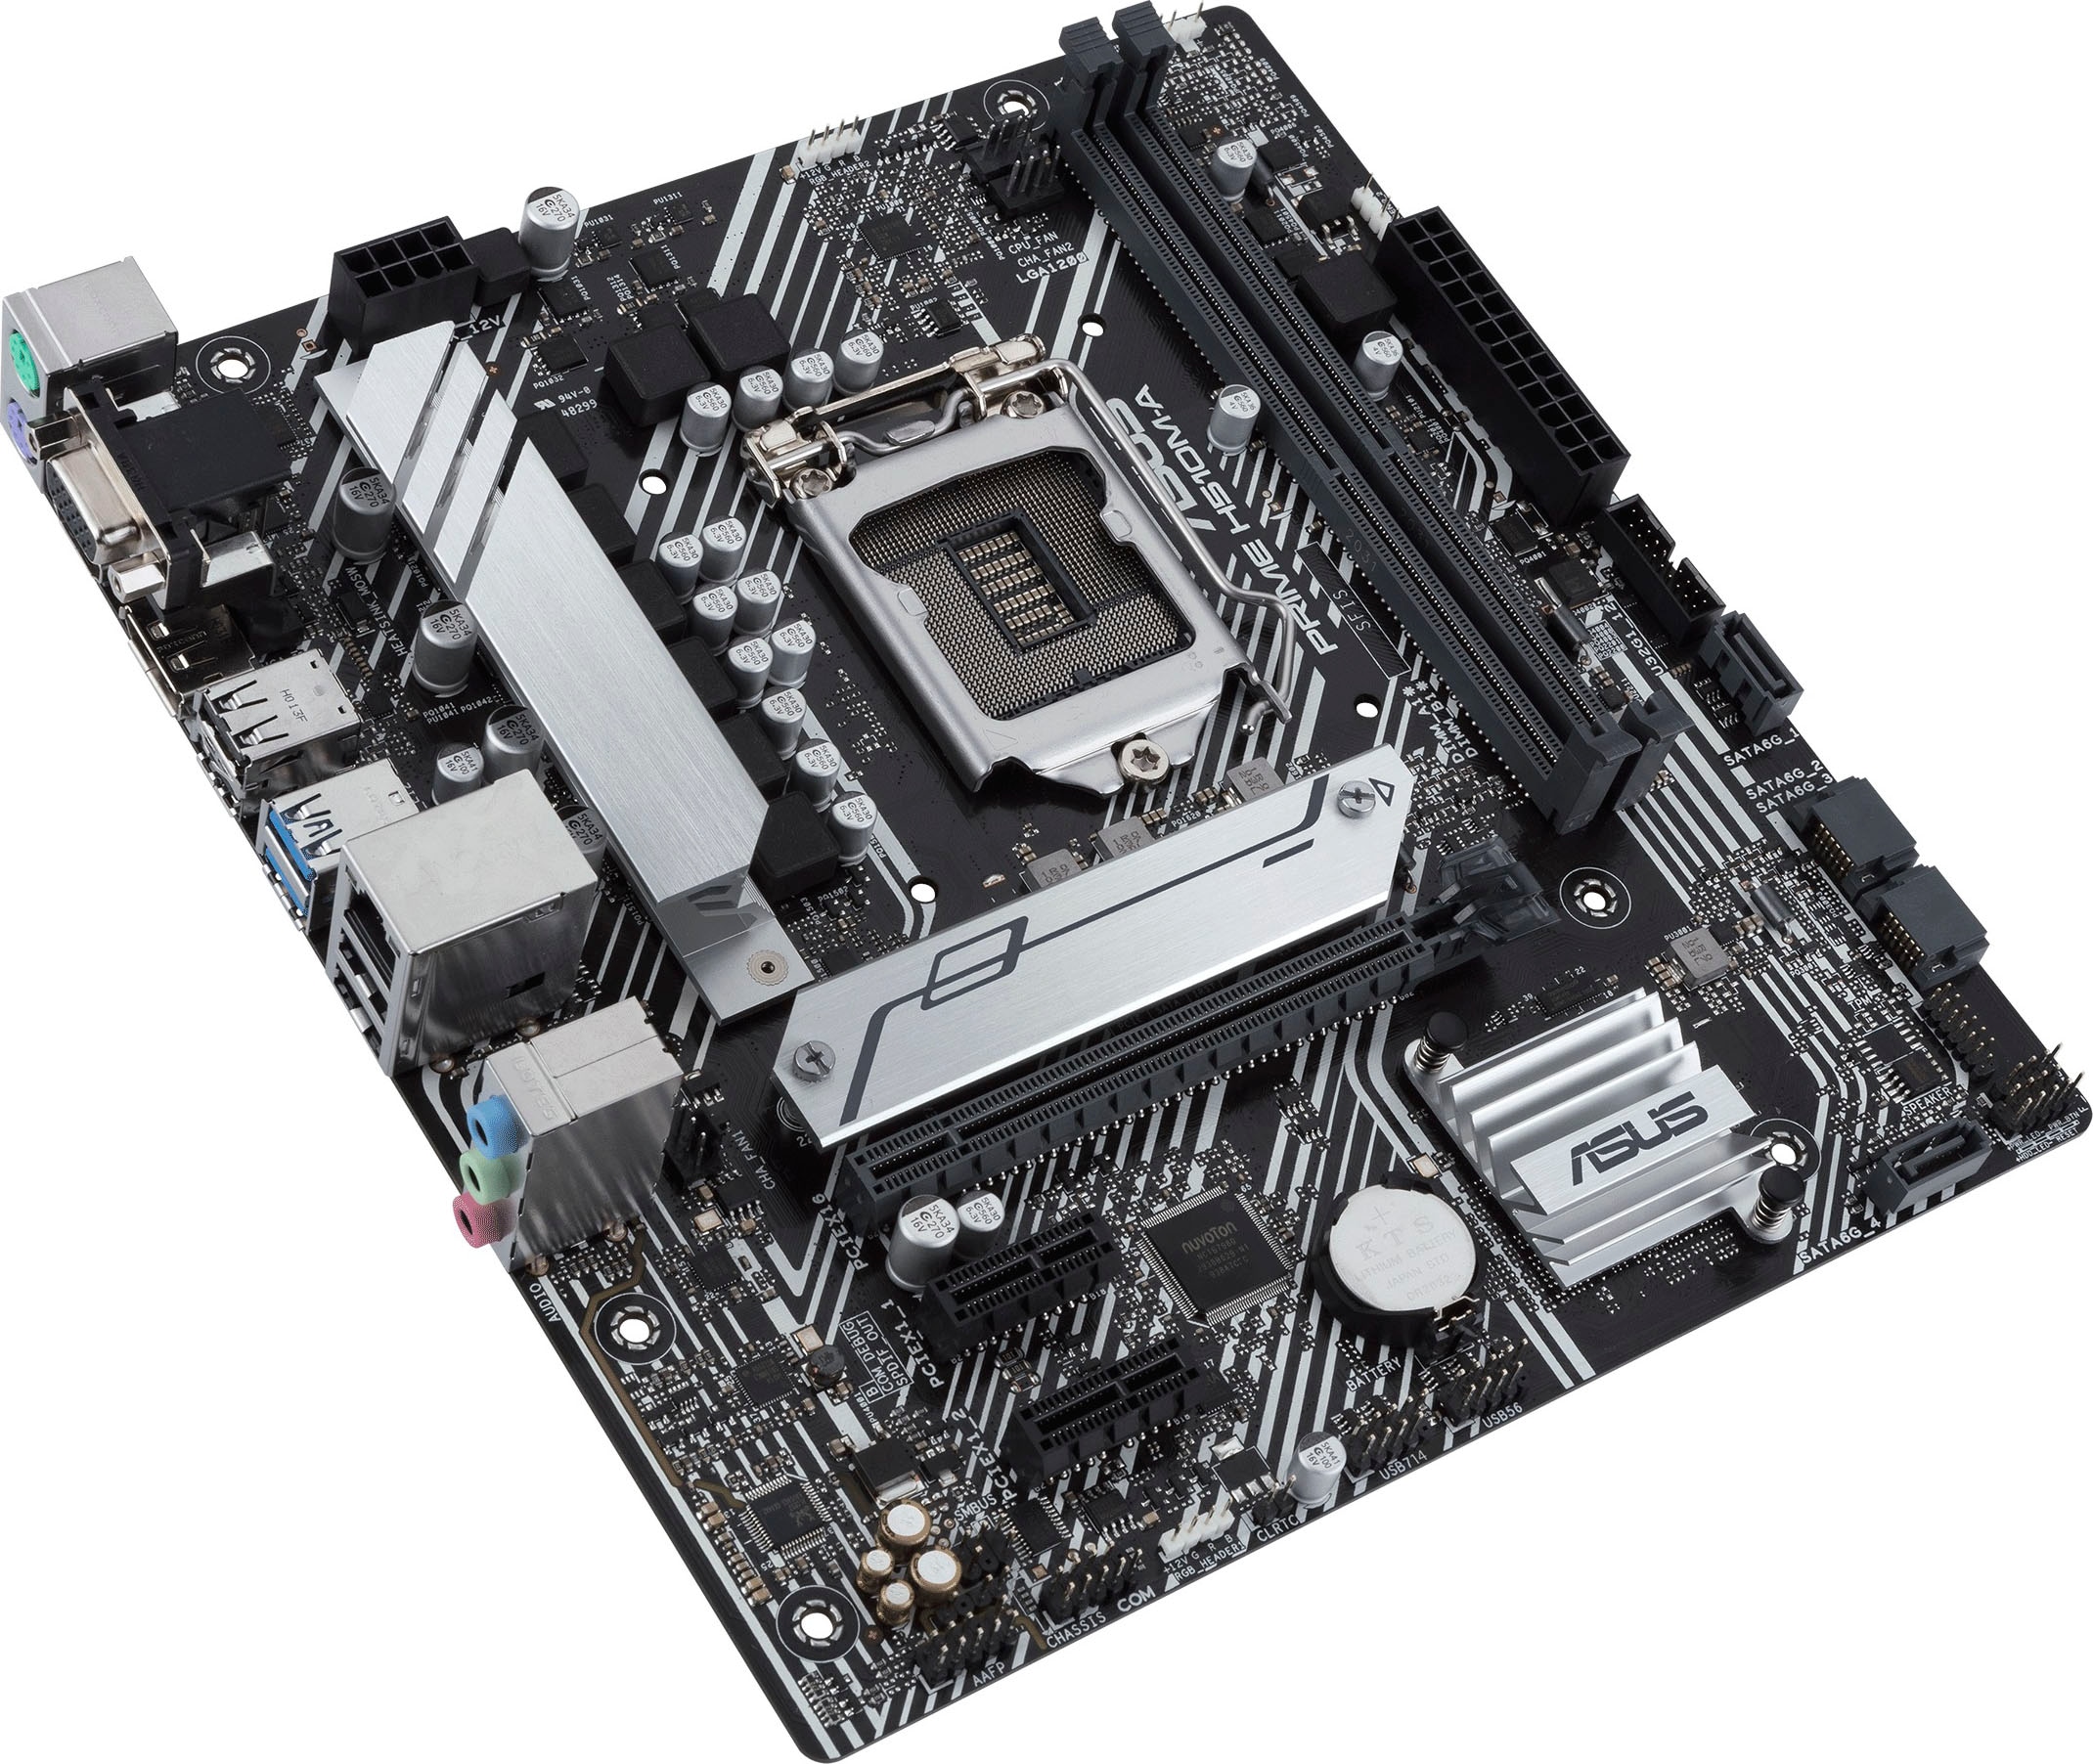 Asus Mainboard »PRIME H510M-A«, mATX, M.2, USB 3.2 Gen 1 Typ-A, Intel 1Gbit/s Ethernet, PCIe 4.0